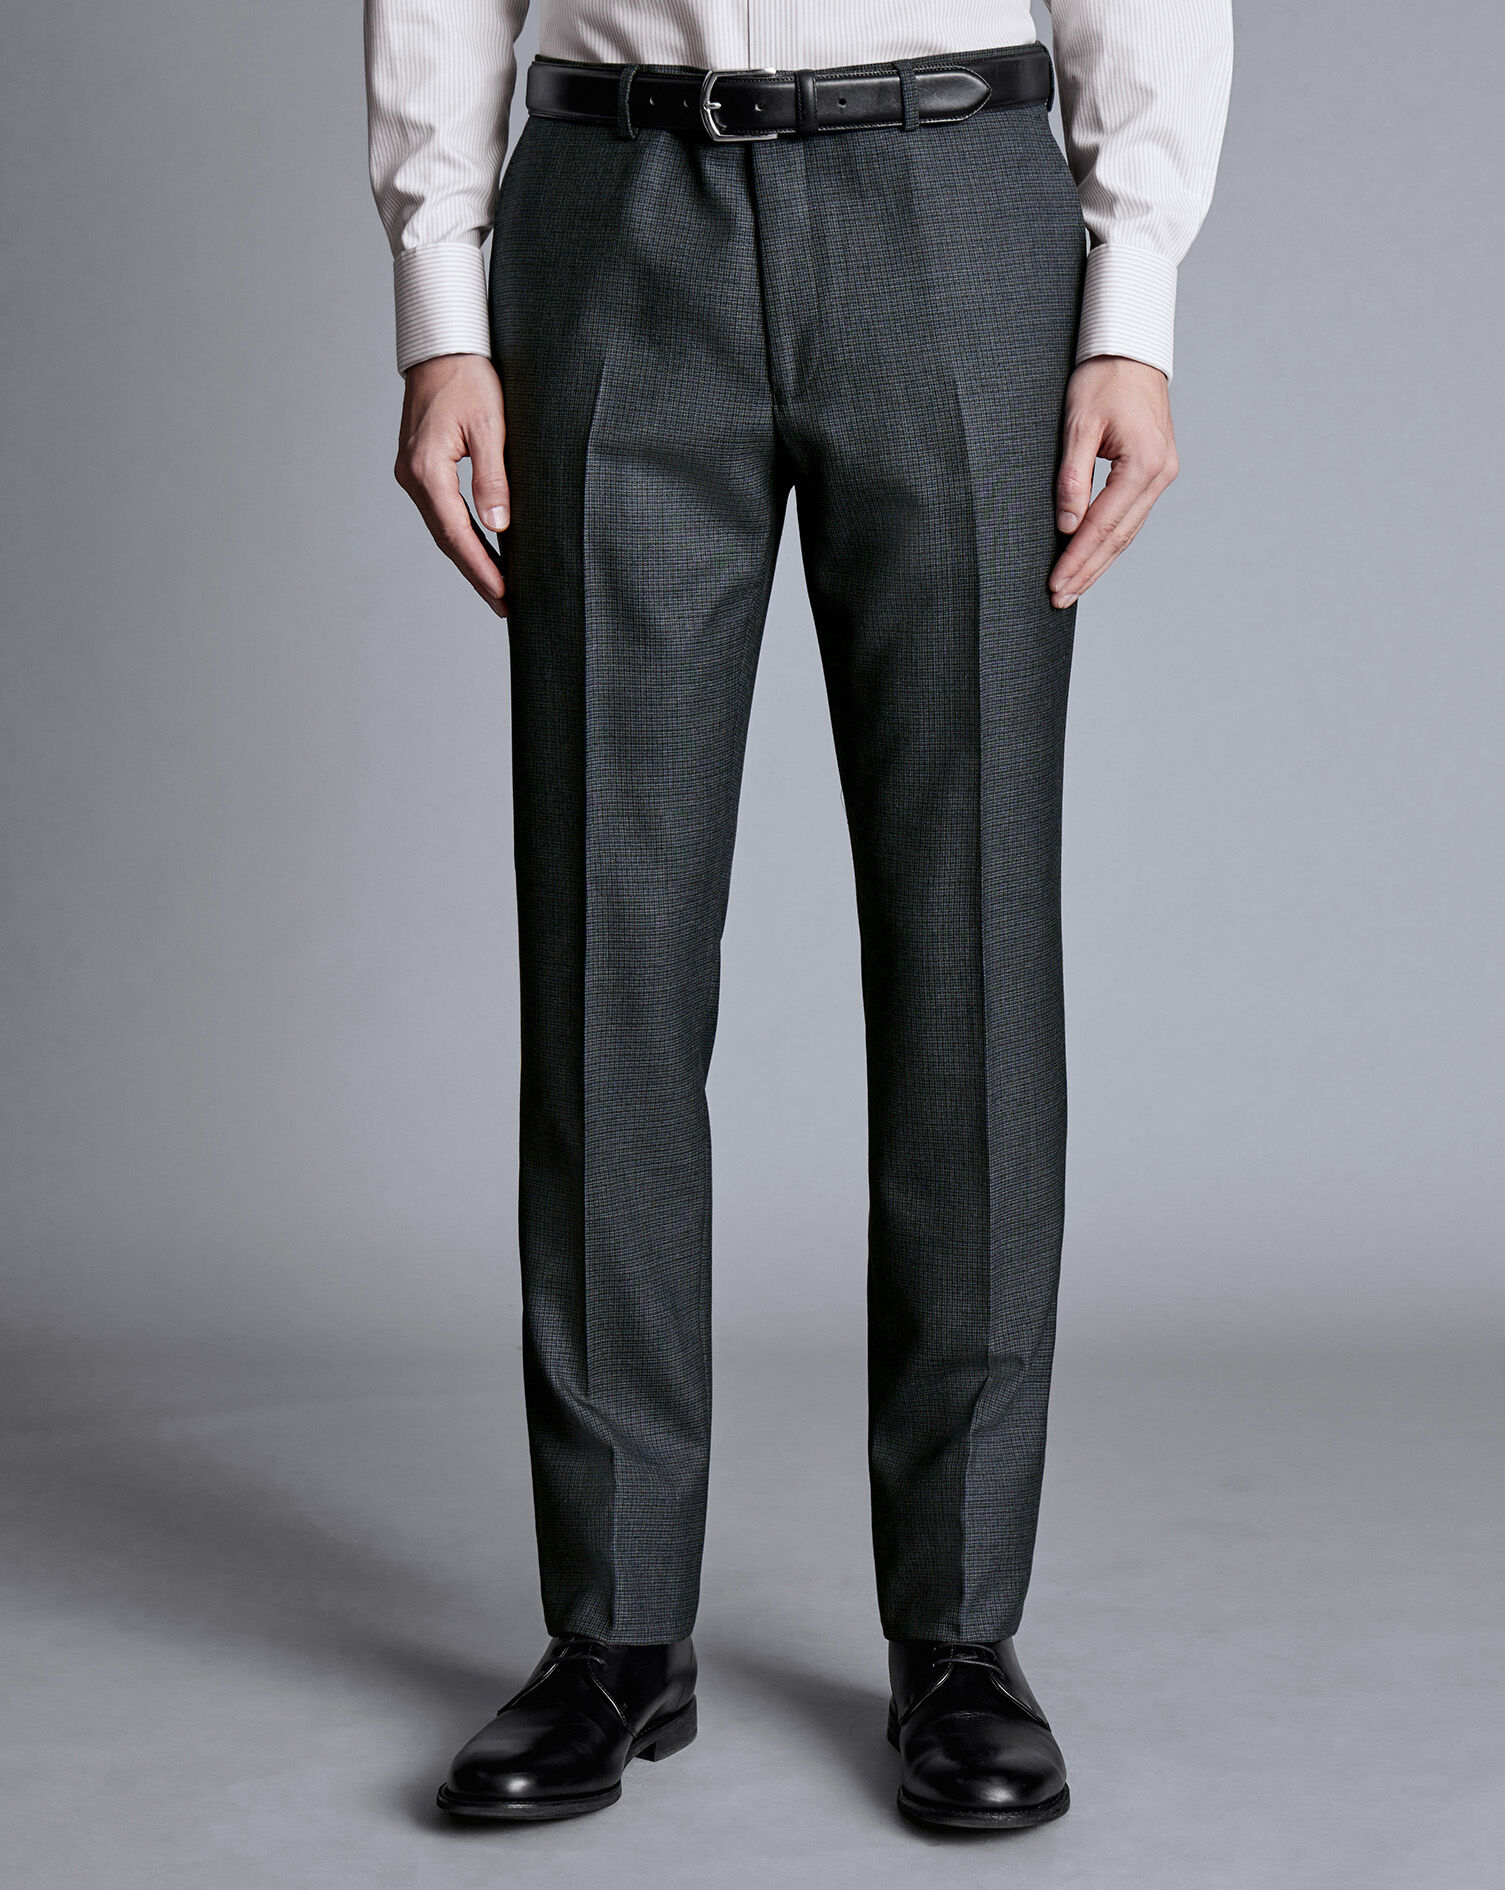 New Look skinny suit trouser in dark grey | ASOS